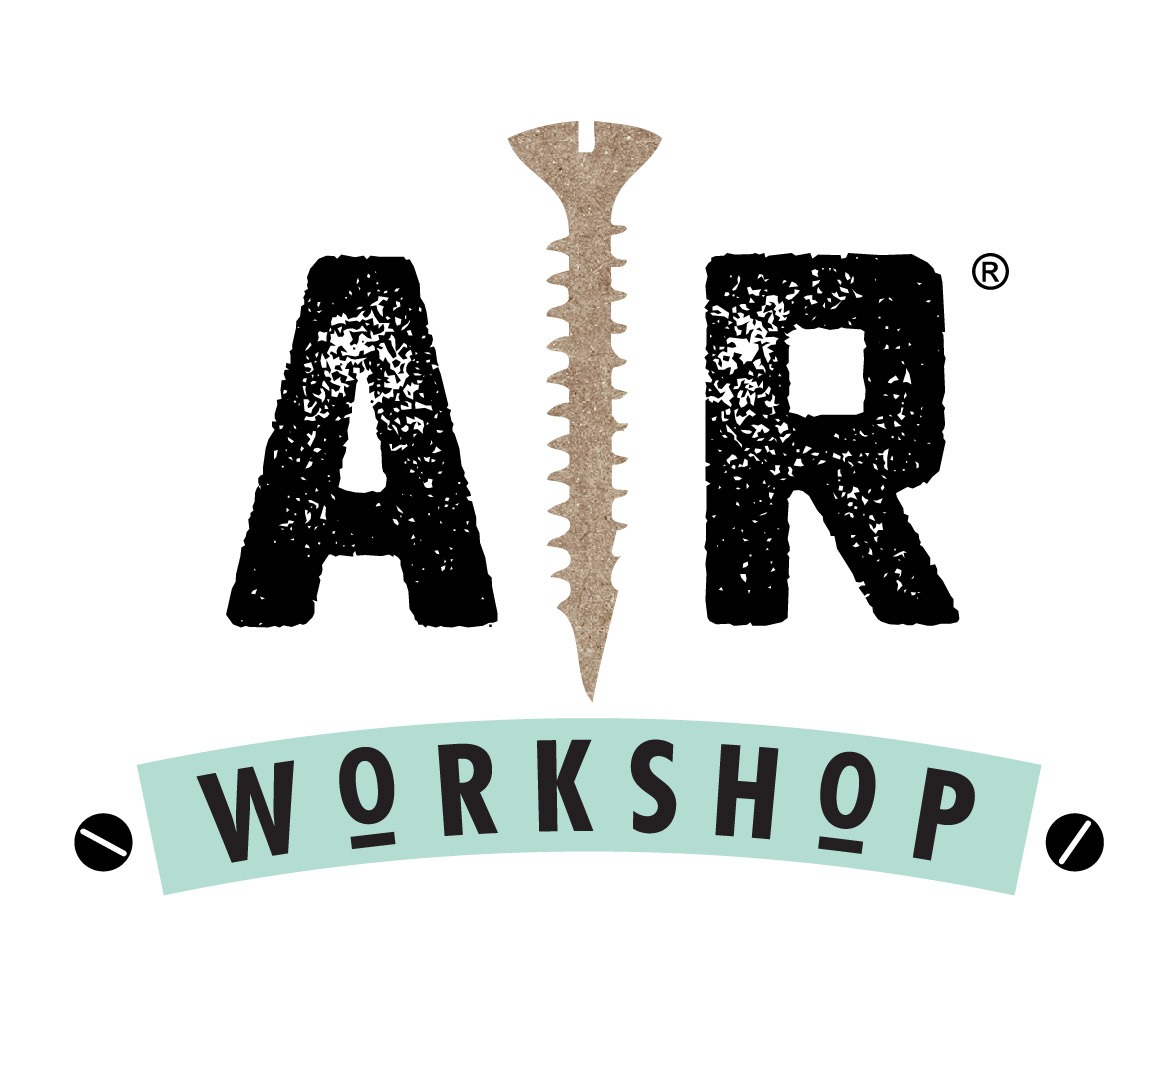 AR Workshop